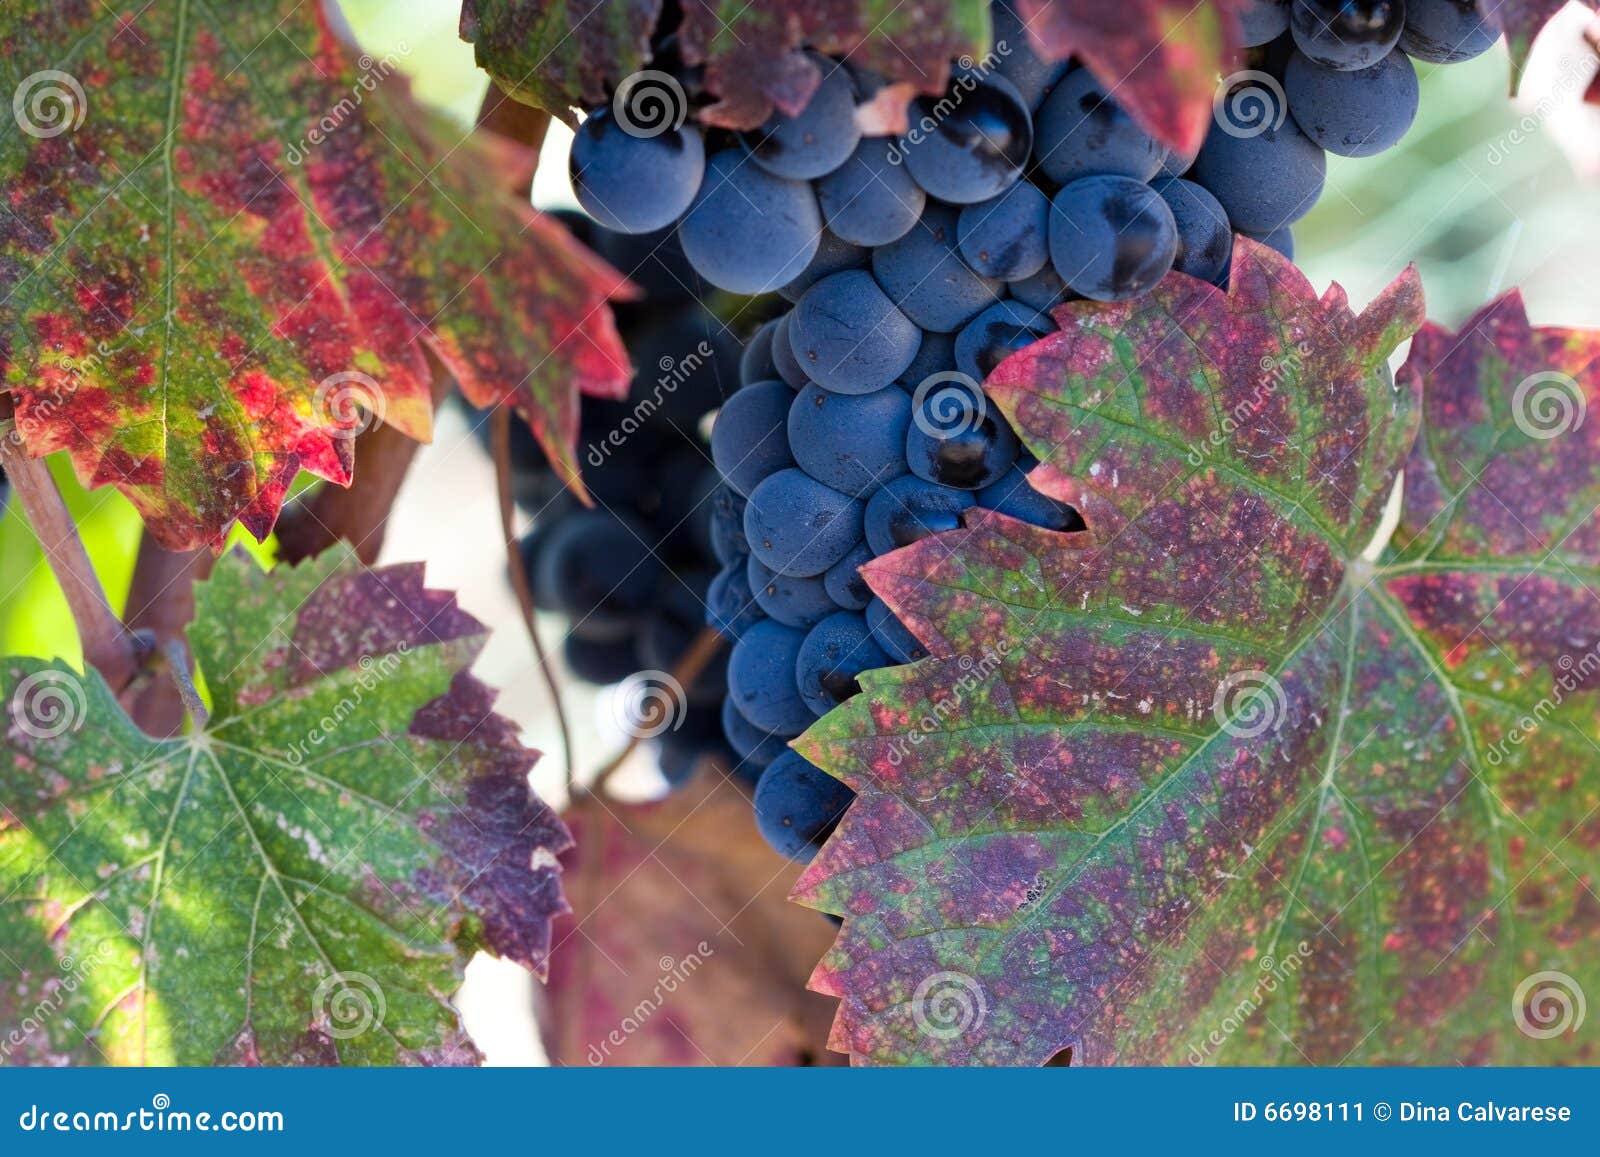 autumn leaves dew laden blue wine grapes